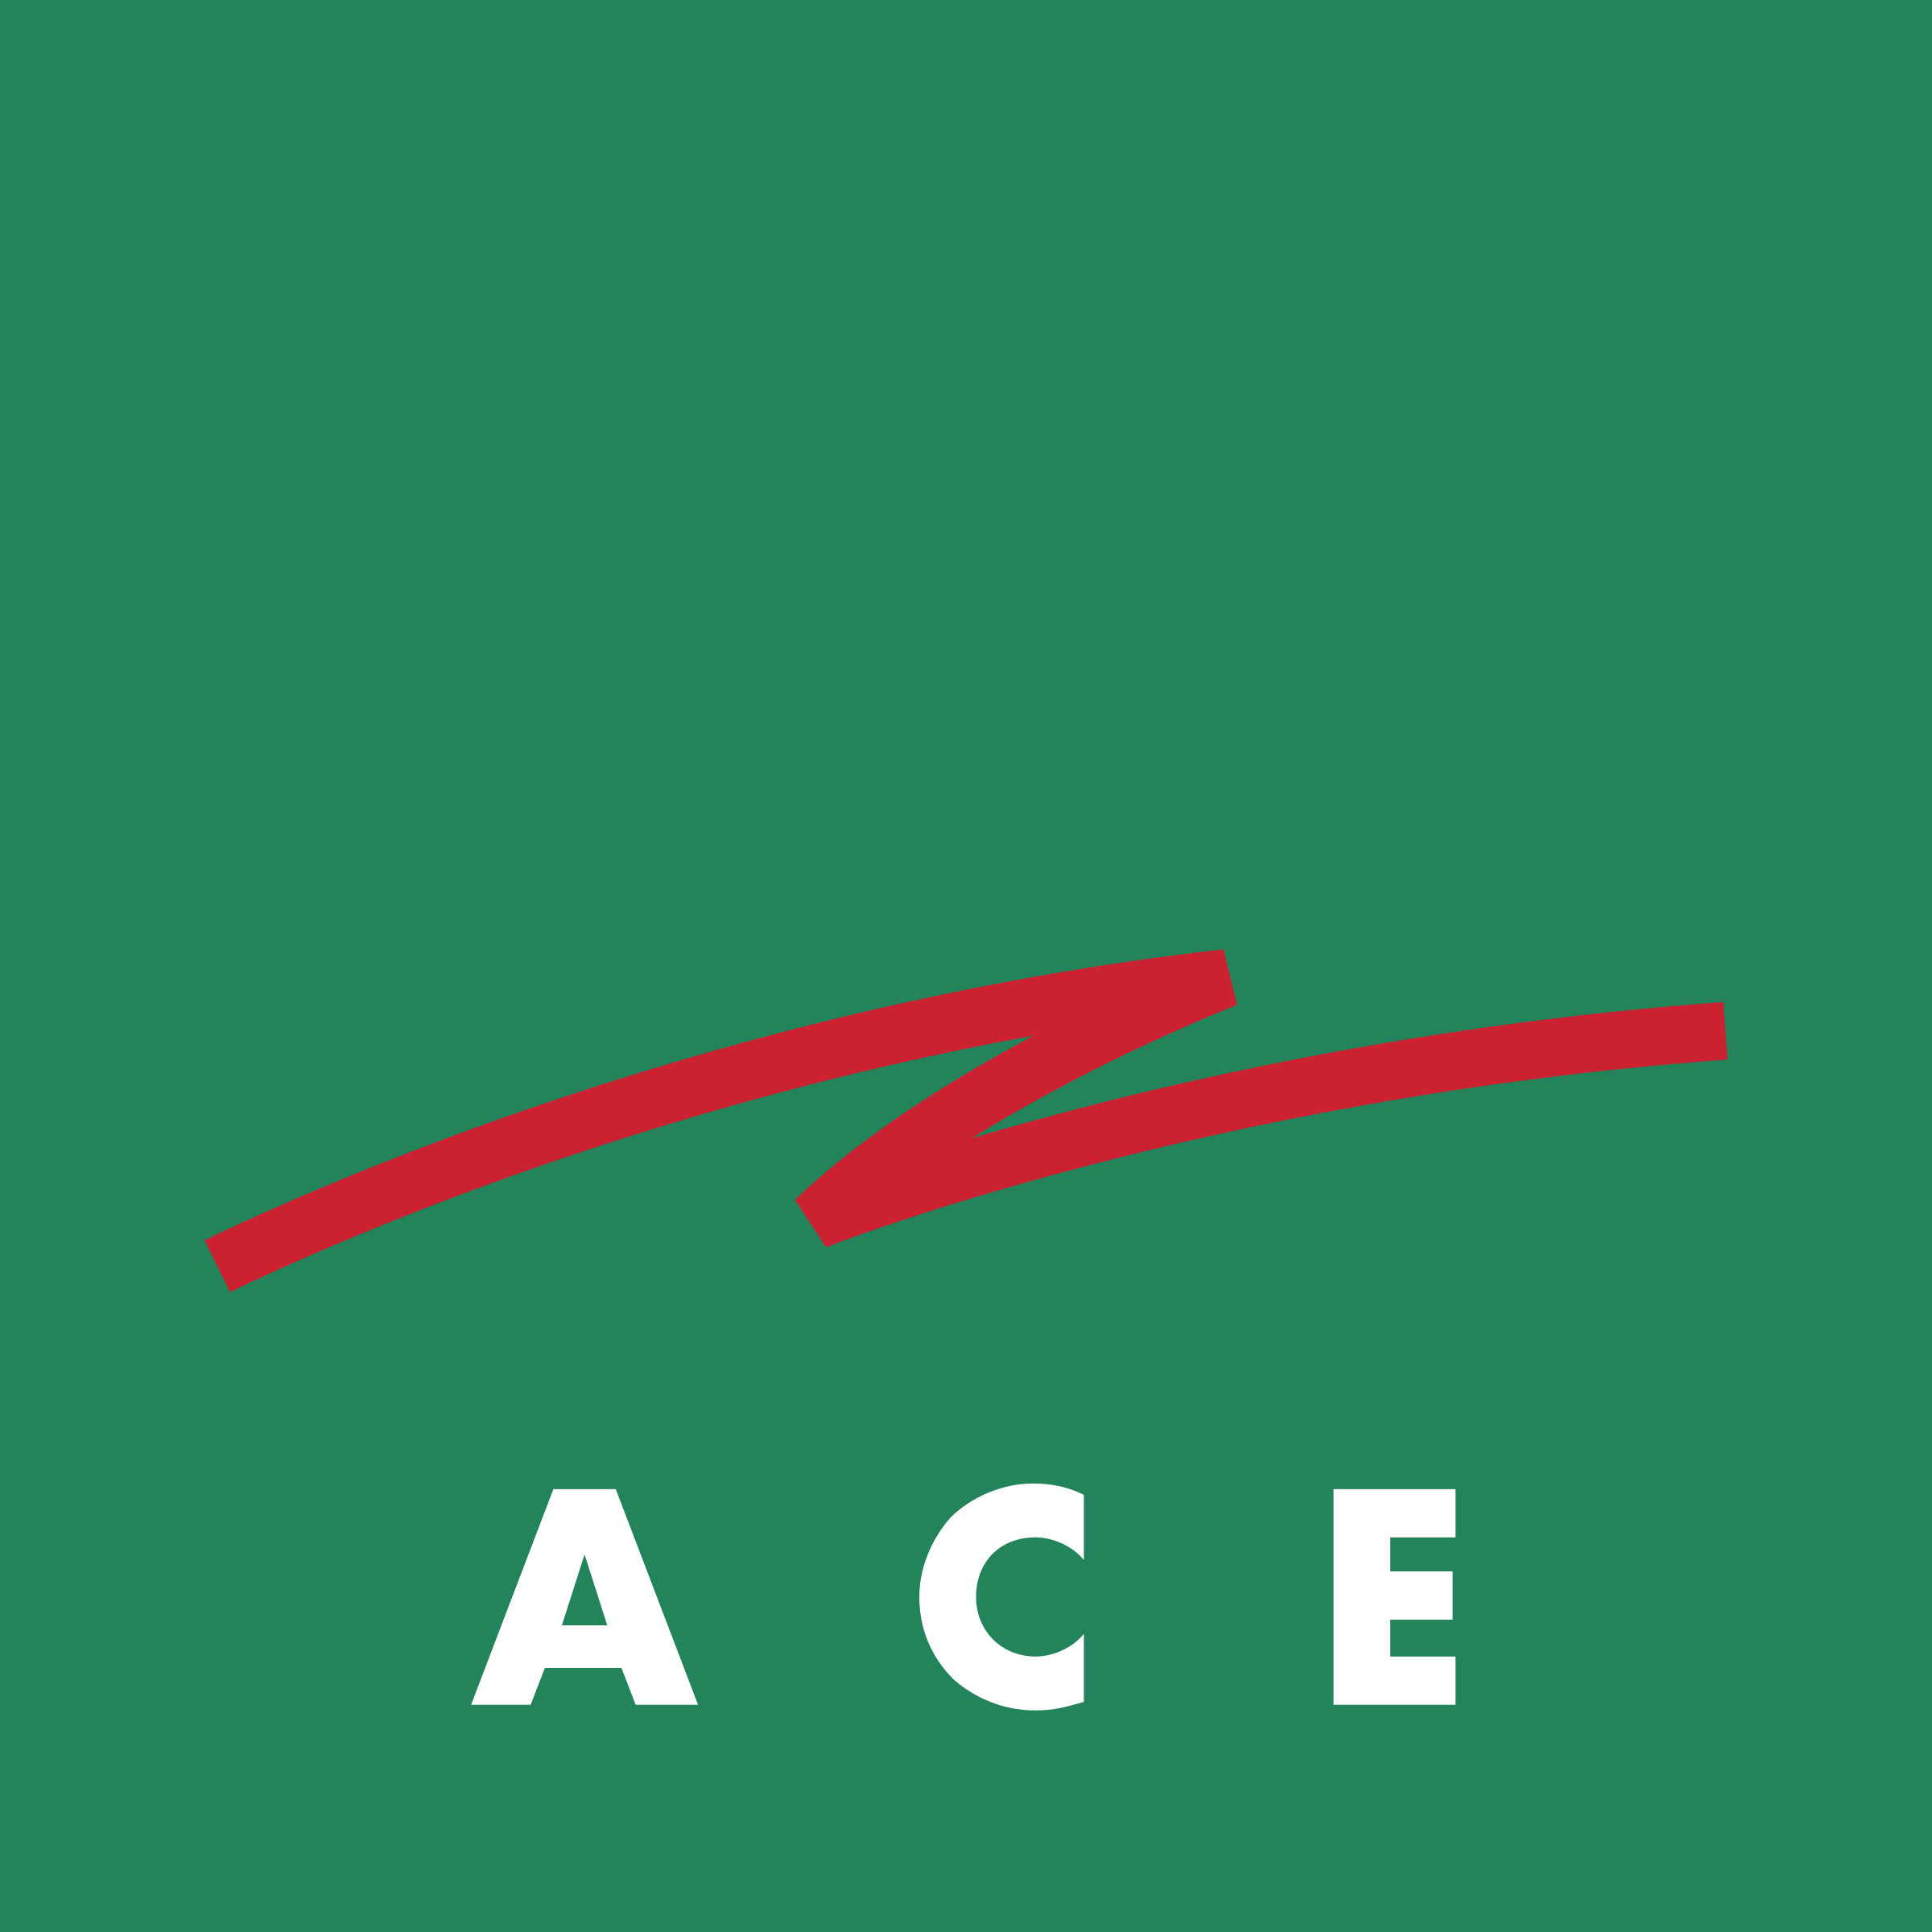 Cash Express Logo - ACE Cash Express Logo PNG Transparent & SVG Vector